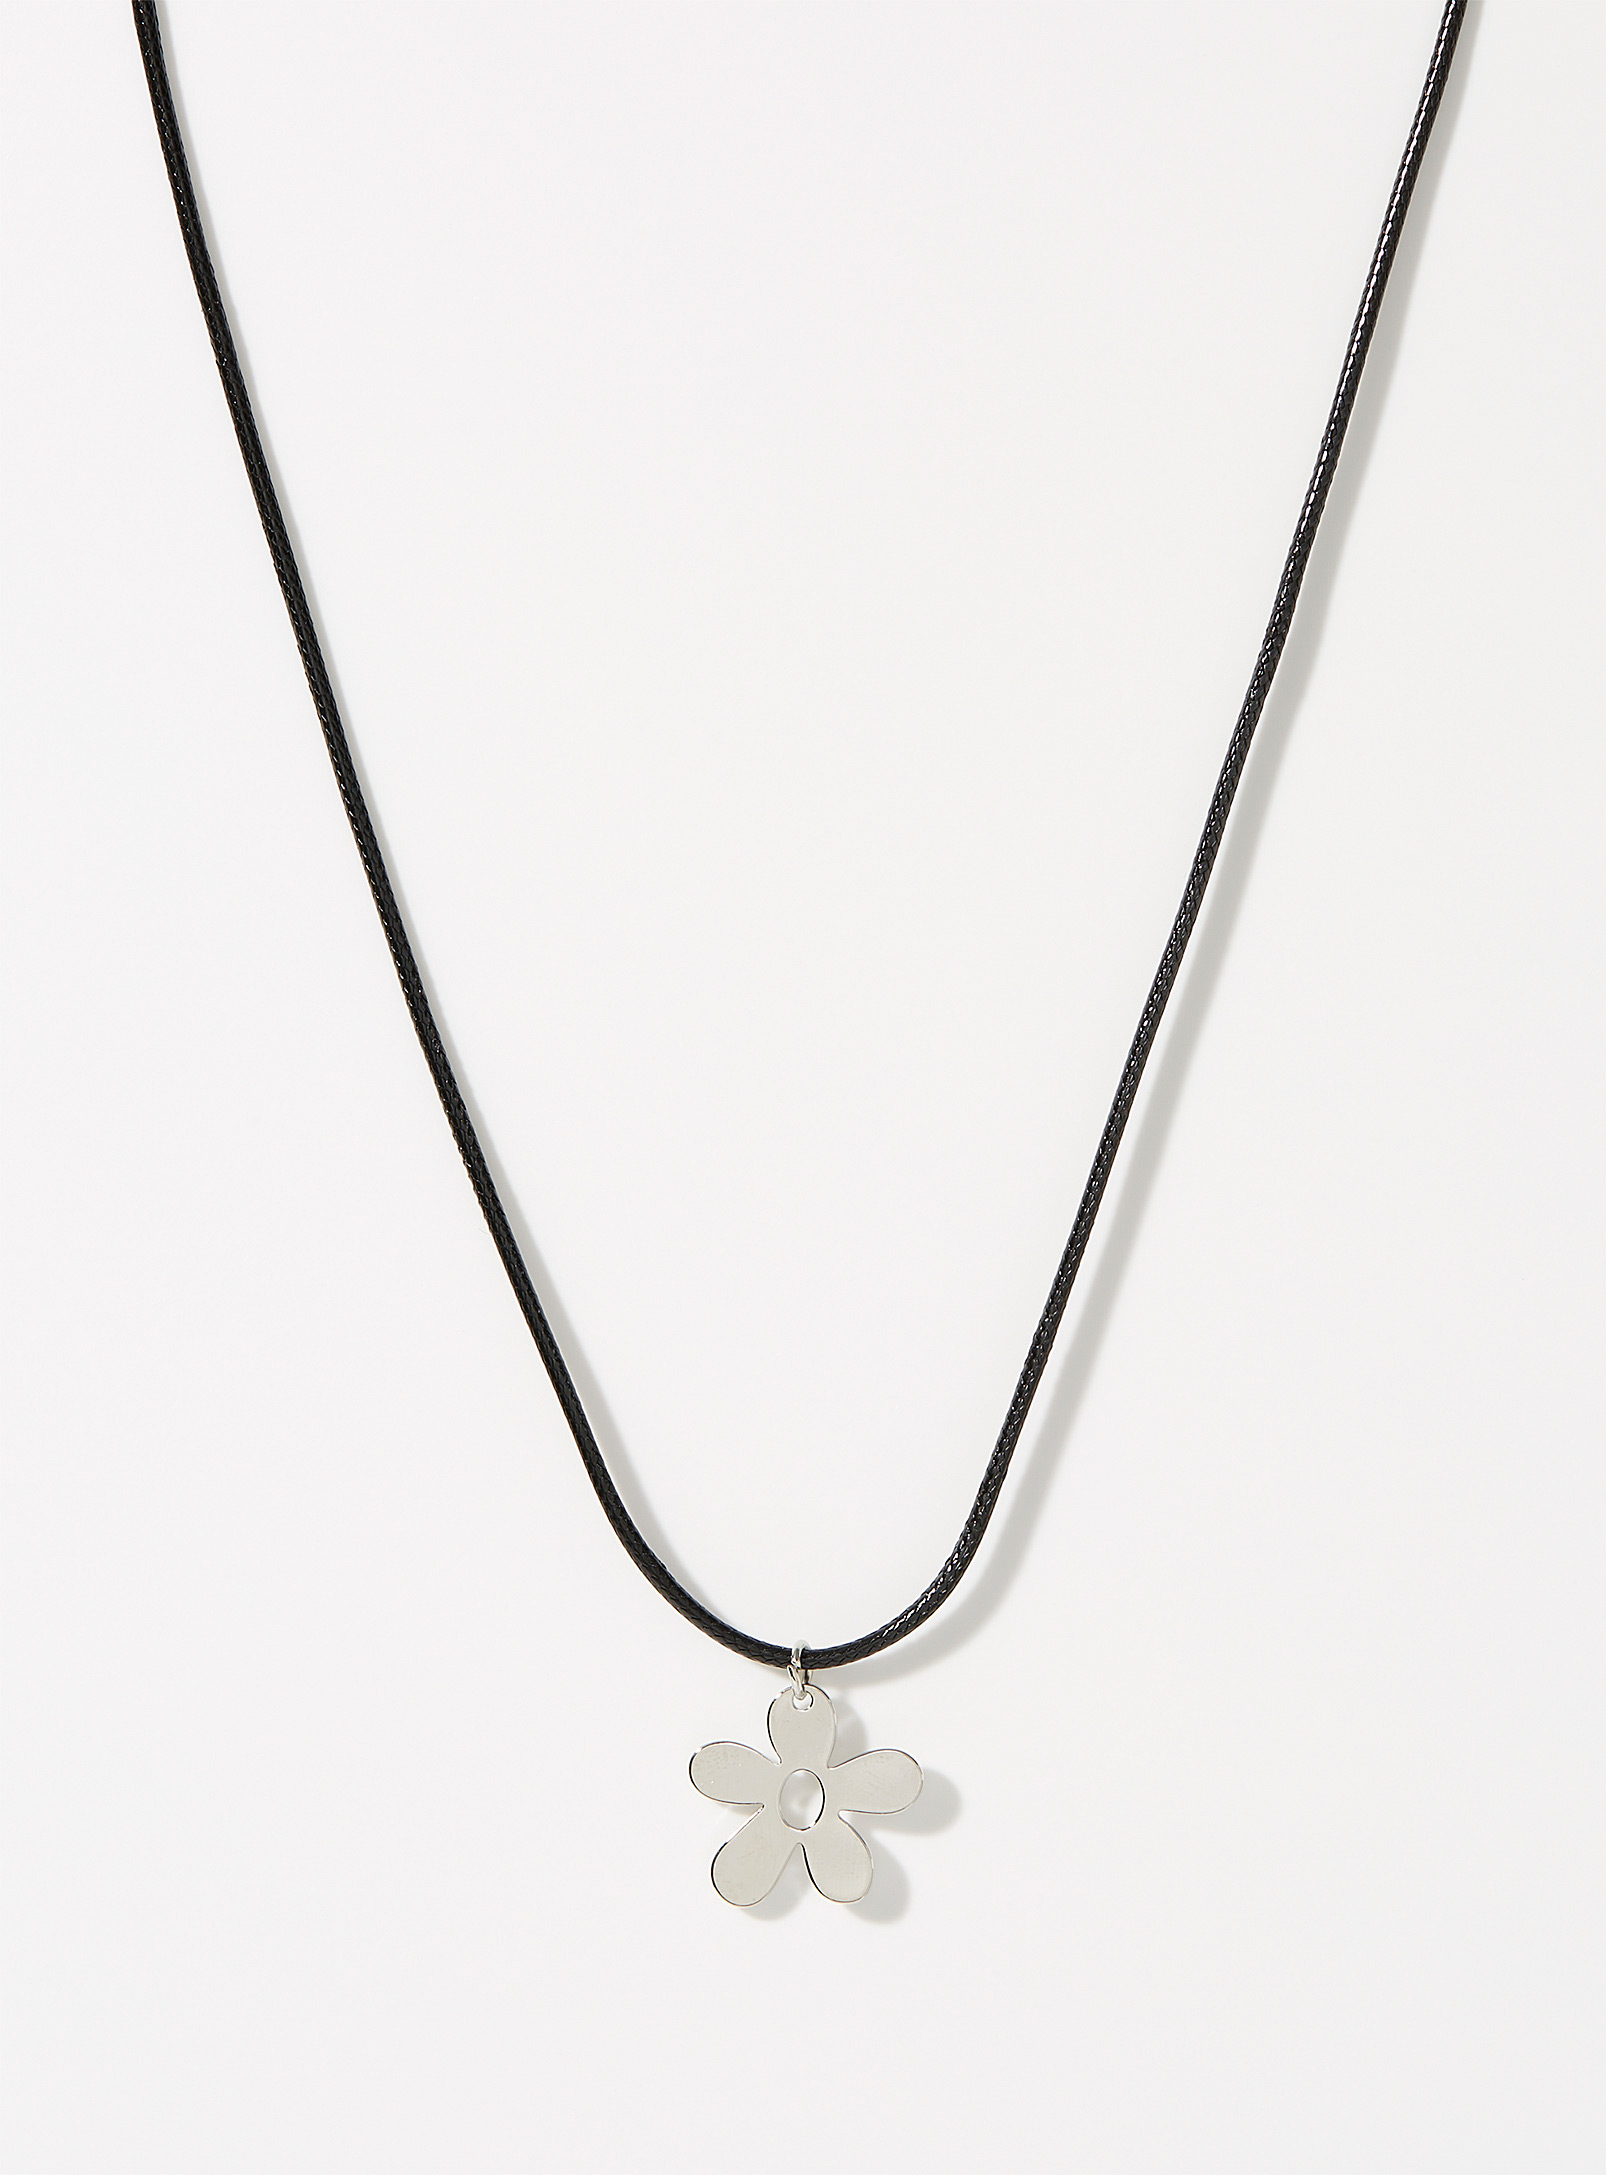 Simons - Women's Shimmery flower cord necklace